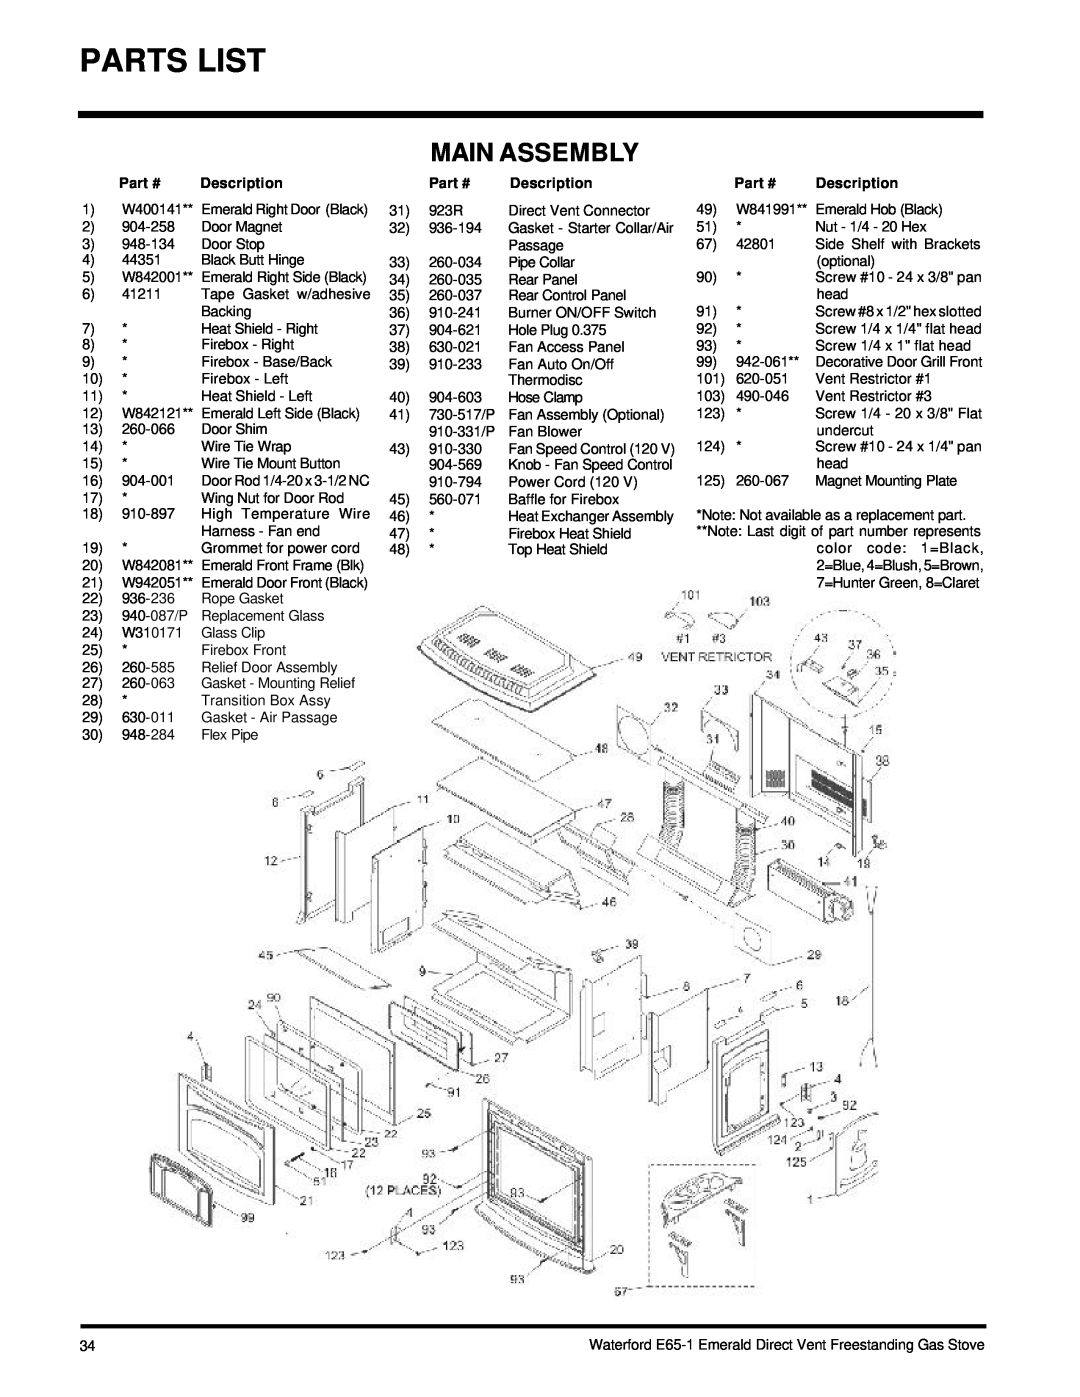 Waterford Appliances E65-NG1, E65-LP1 installation manual Parts List, Main Assembly, Part # Description 